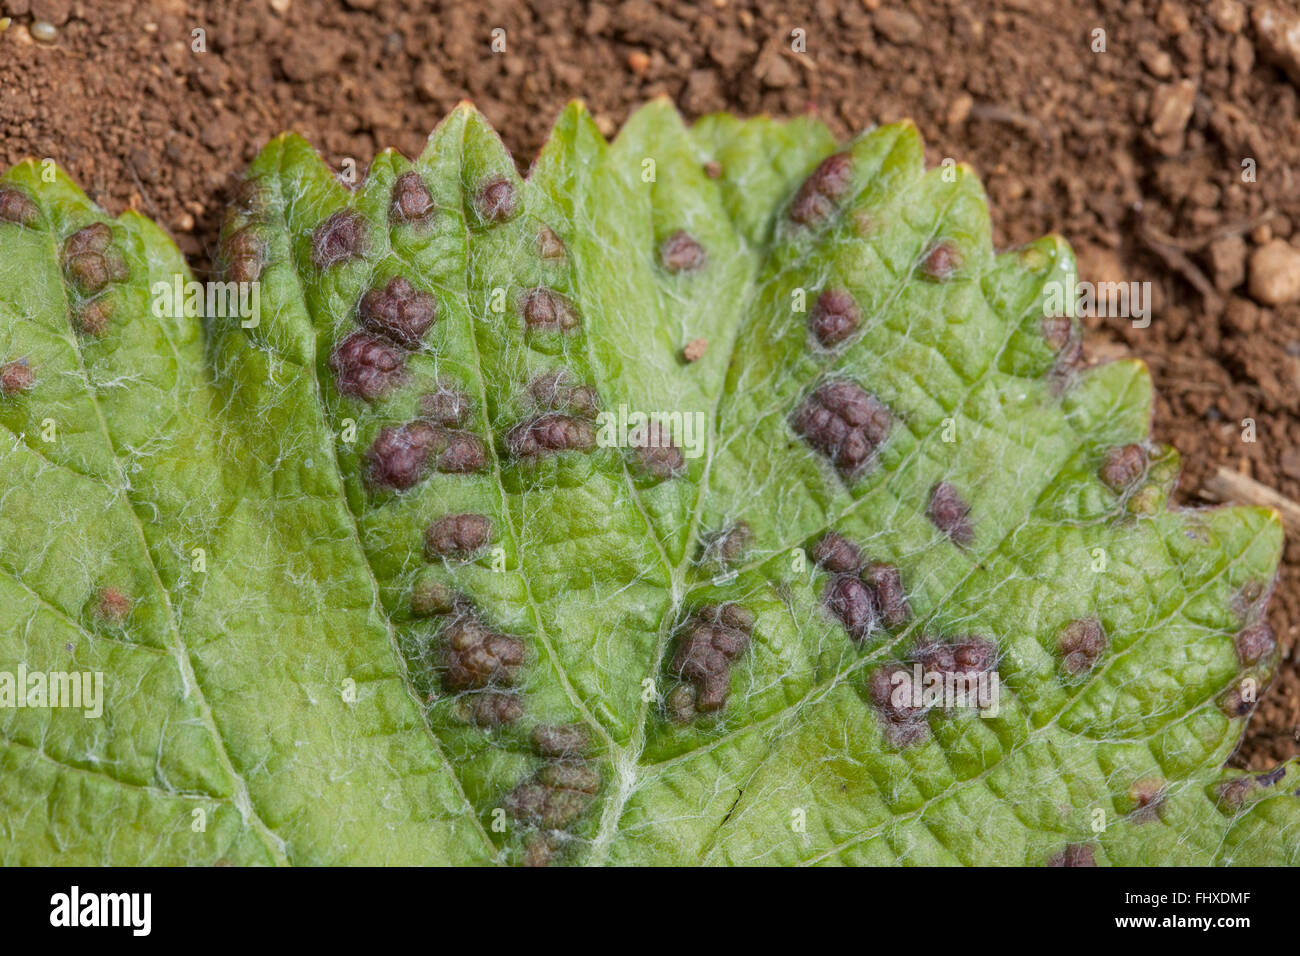 Erineum leaf mite Stock Photo